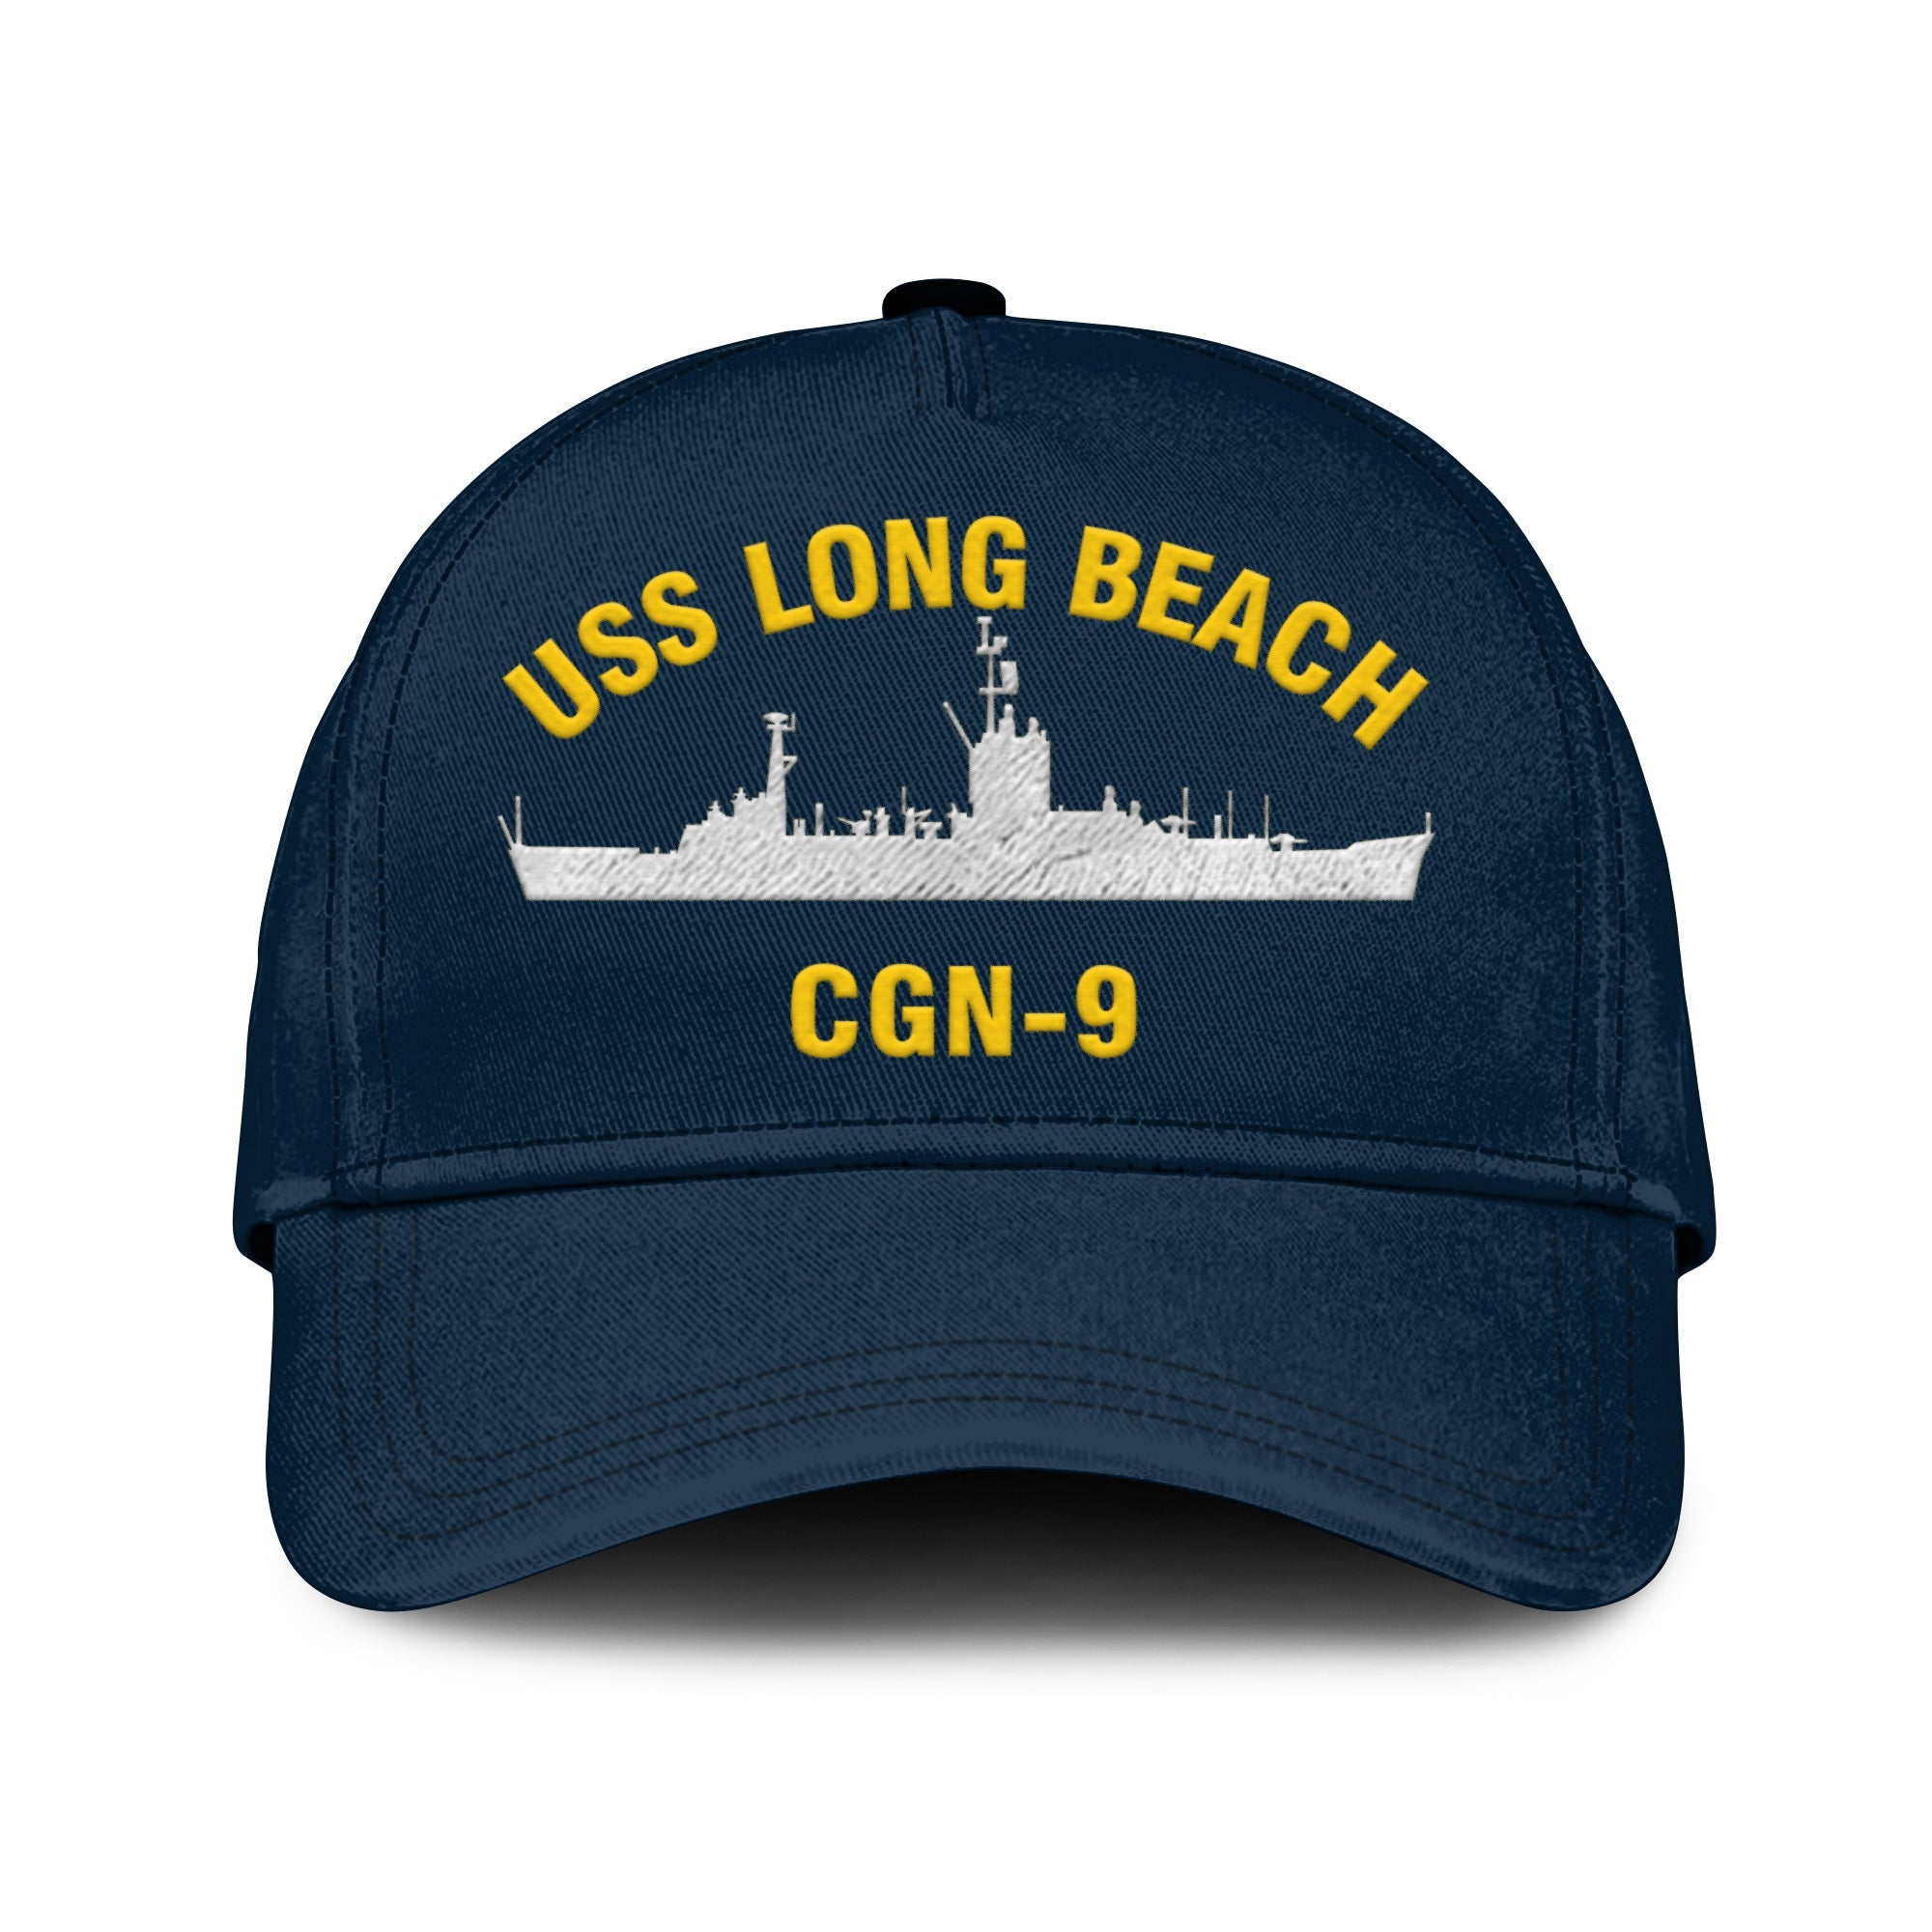 Uss Long Beach Cgn-9 Classic Cap, Custom Print/embroidered Us Navy Ships Classic Baseball Cap, Gift For Navy Veteran